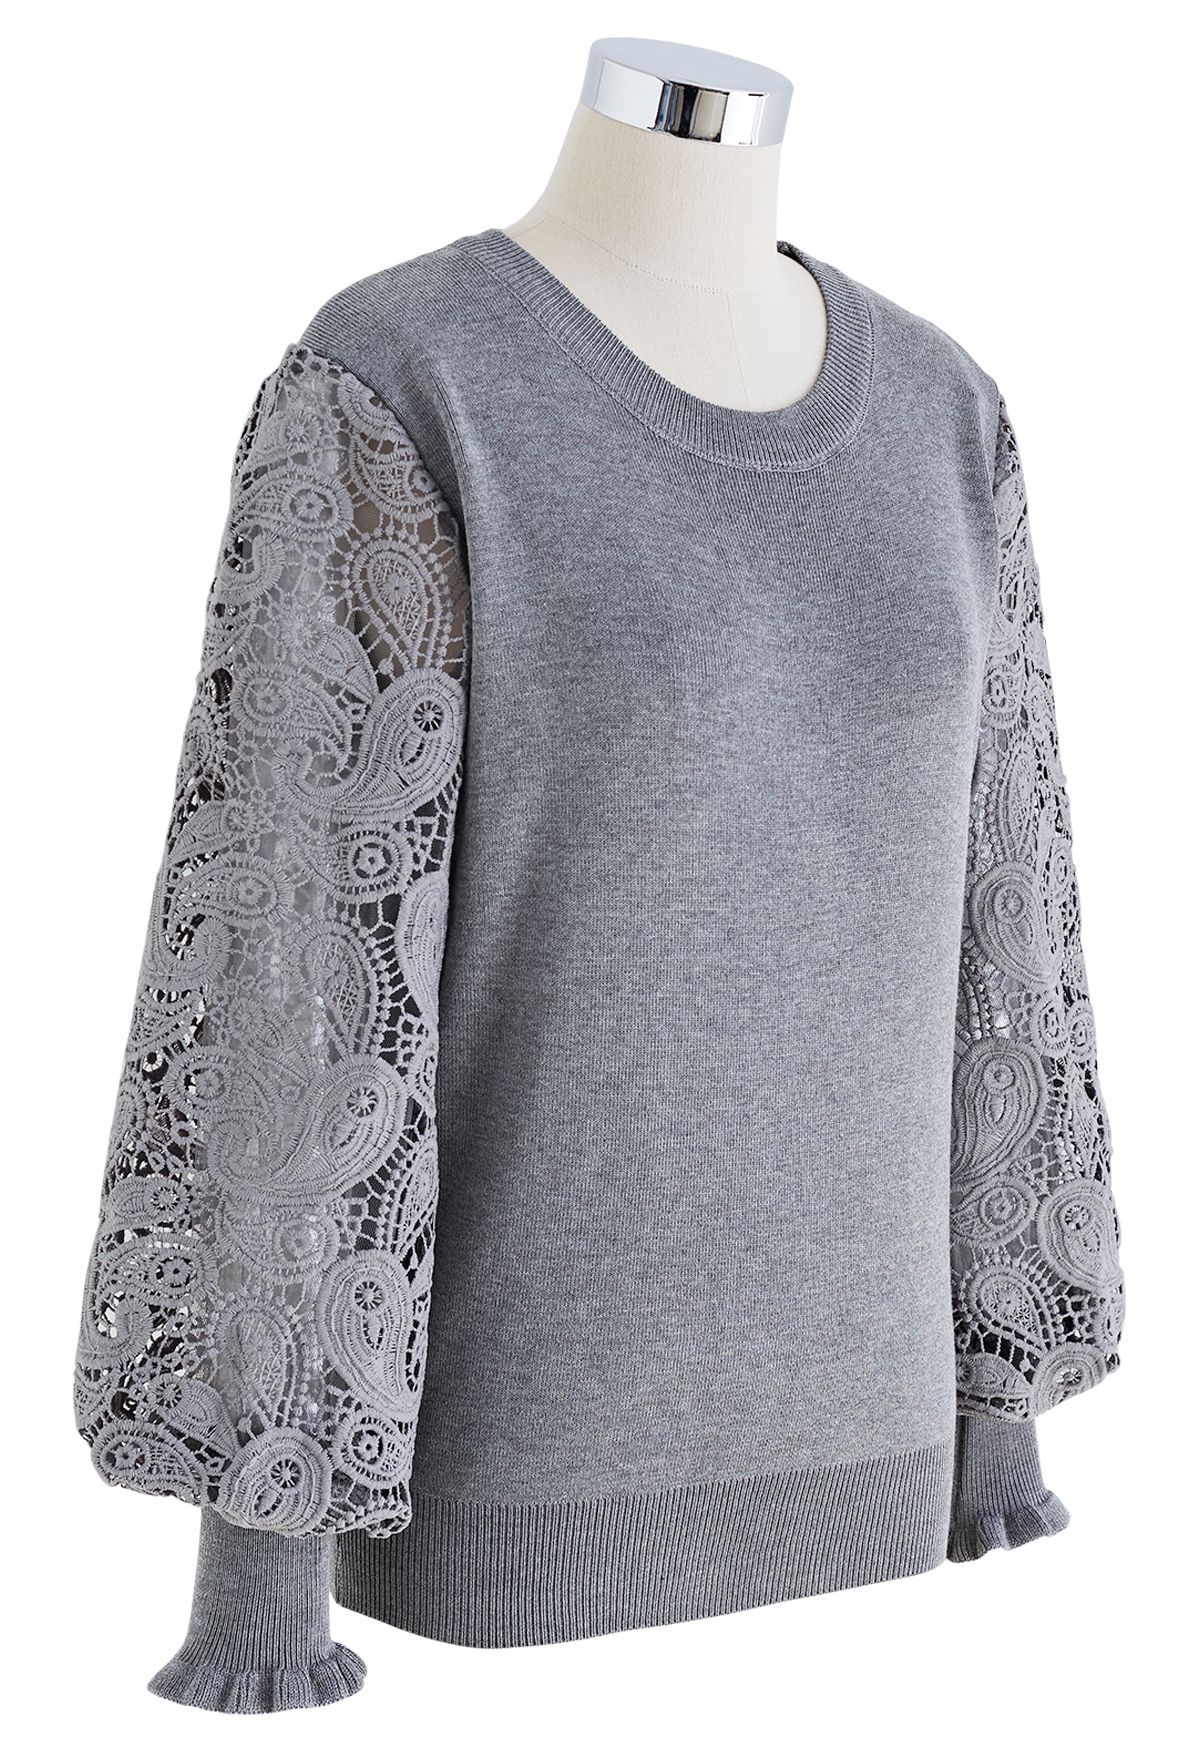 Paisley Crochet Sleeve Knit Top in Grey